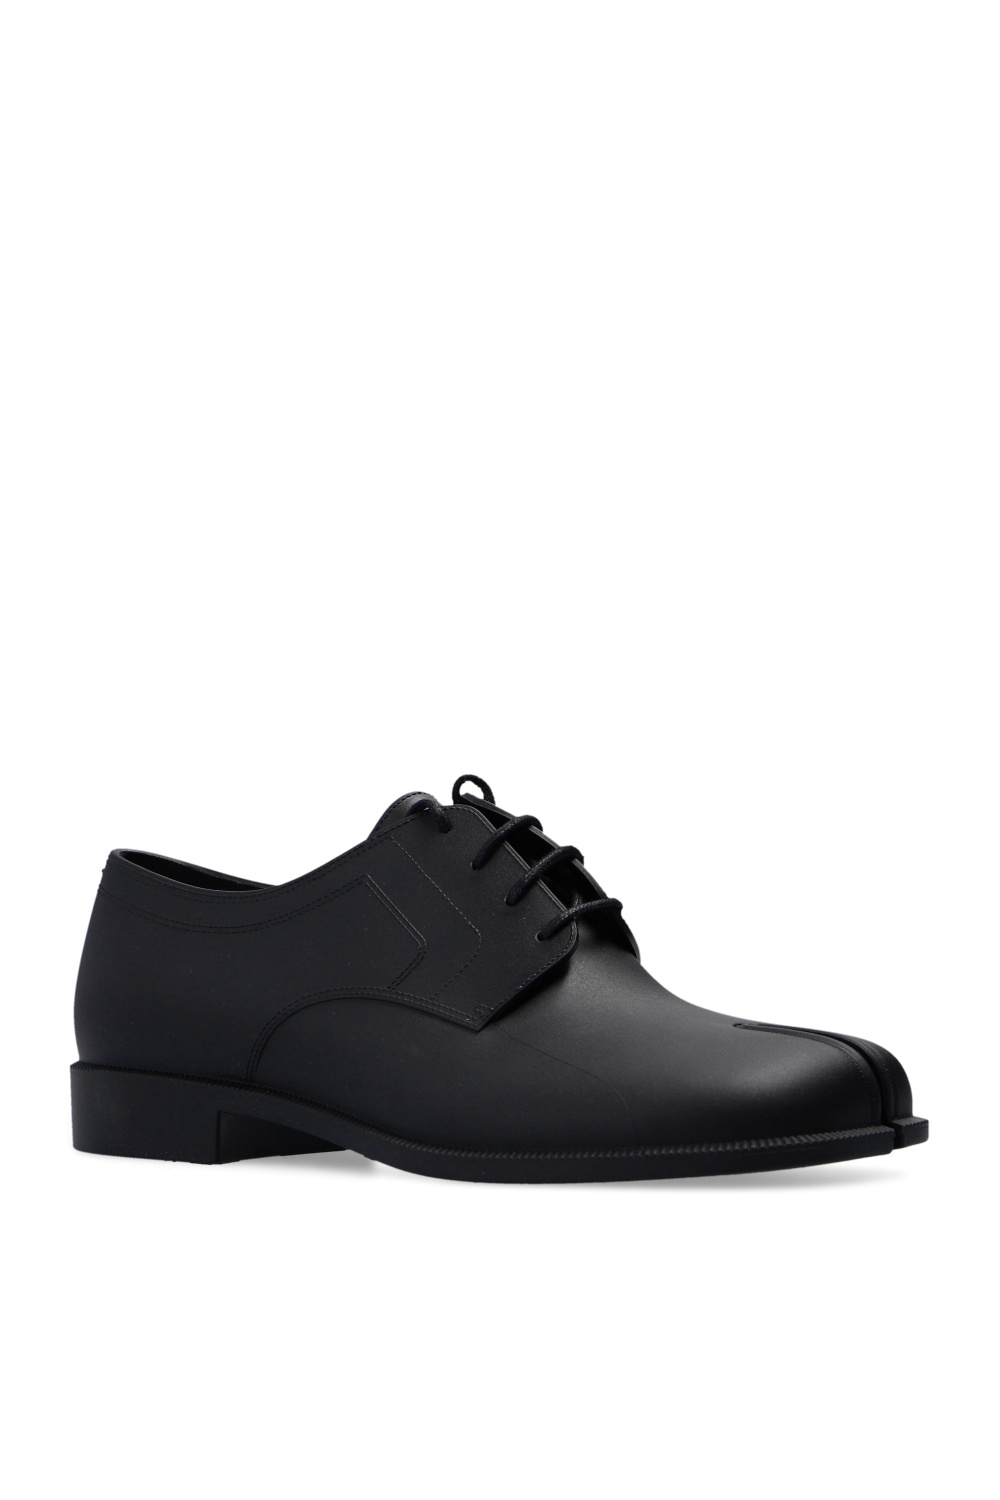 Maison Margiela ‘Tabi’ toe BLACK shoes